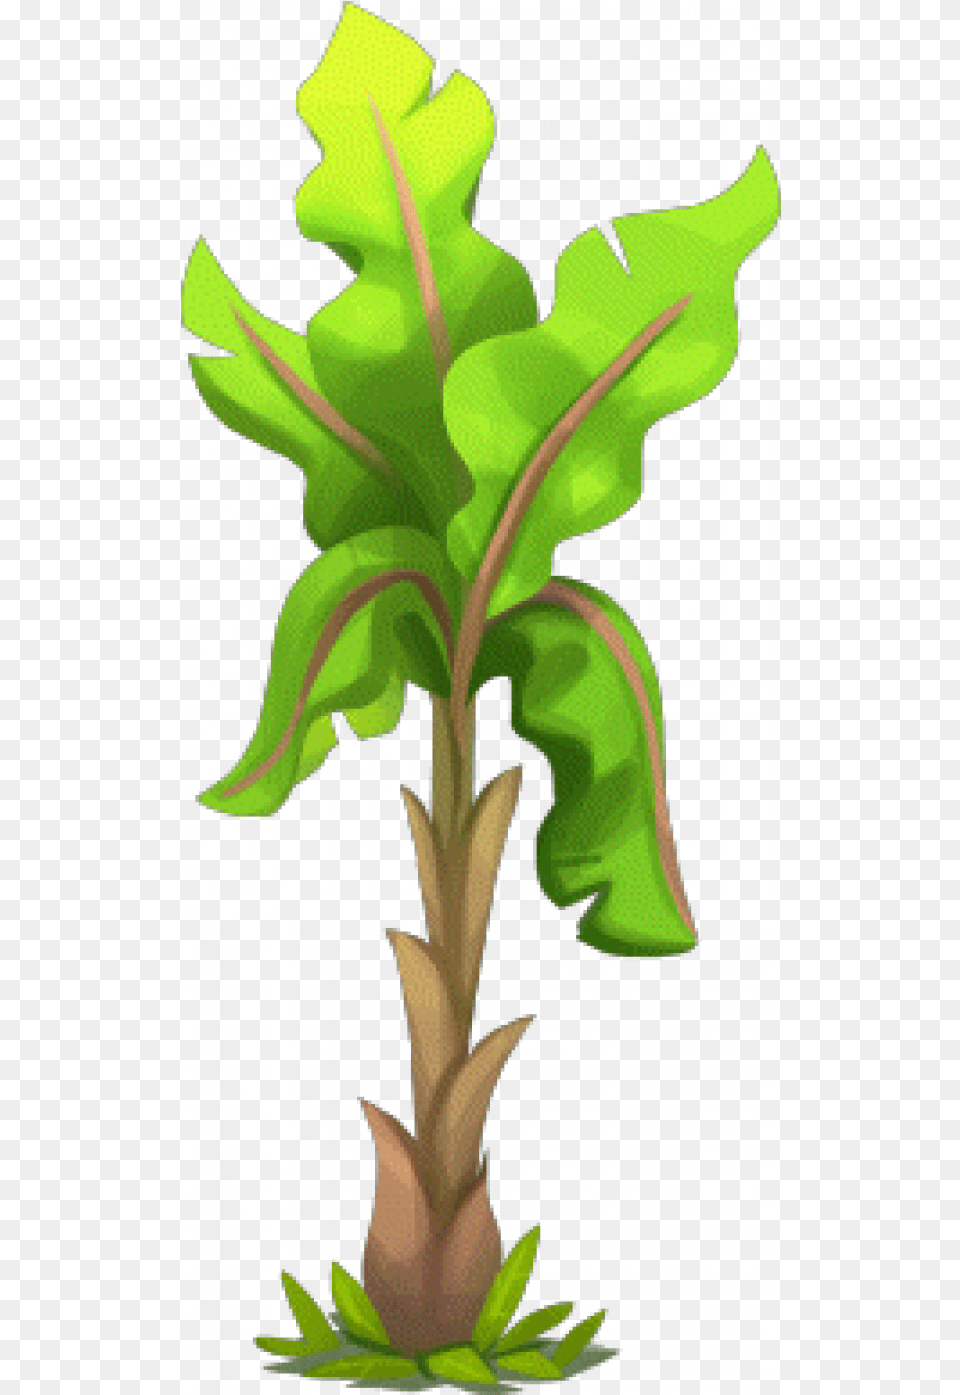 Banana Tree Images Banana Tree Hd, Leaf, Plant, Green, Vegetation Free Transparent Png